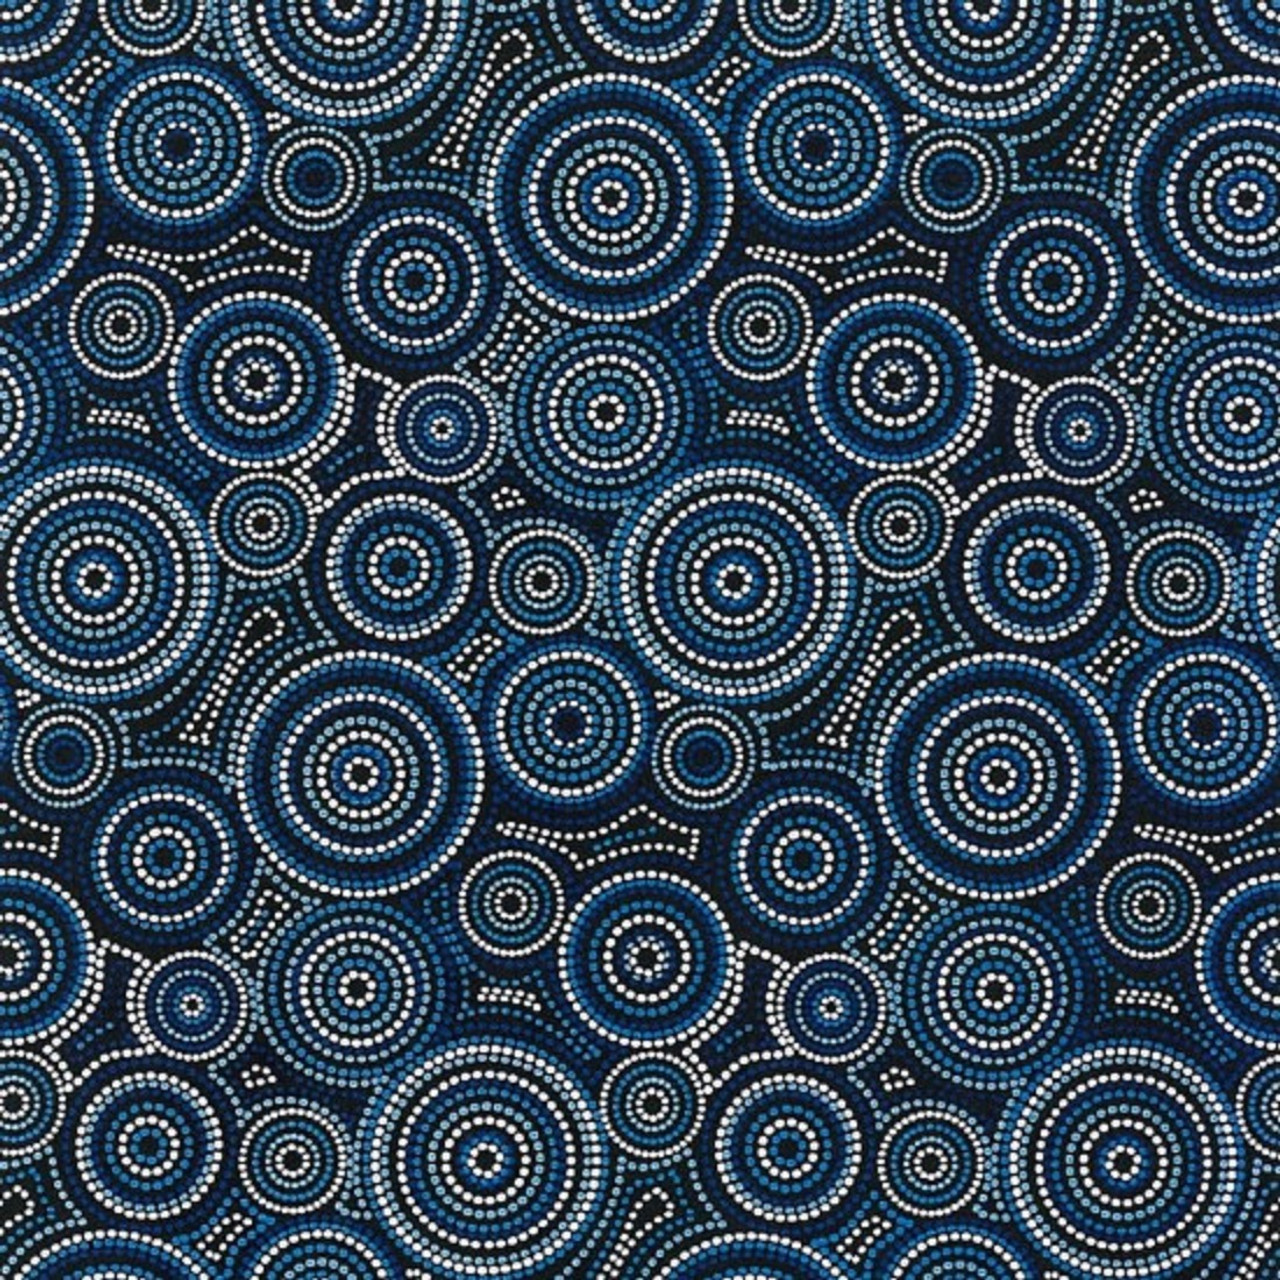 Australian Aboriginal Art Inspired Urite Circle Blue Cotton Quilting Fabric  1/2 YARD